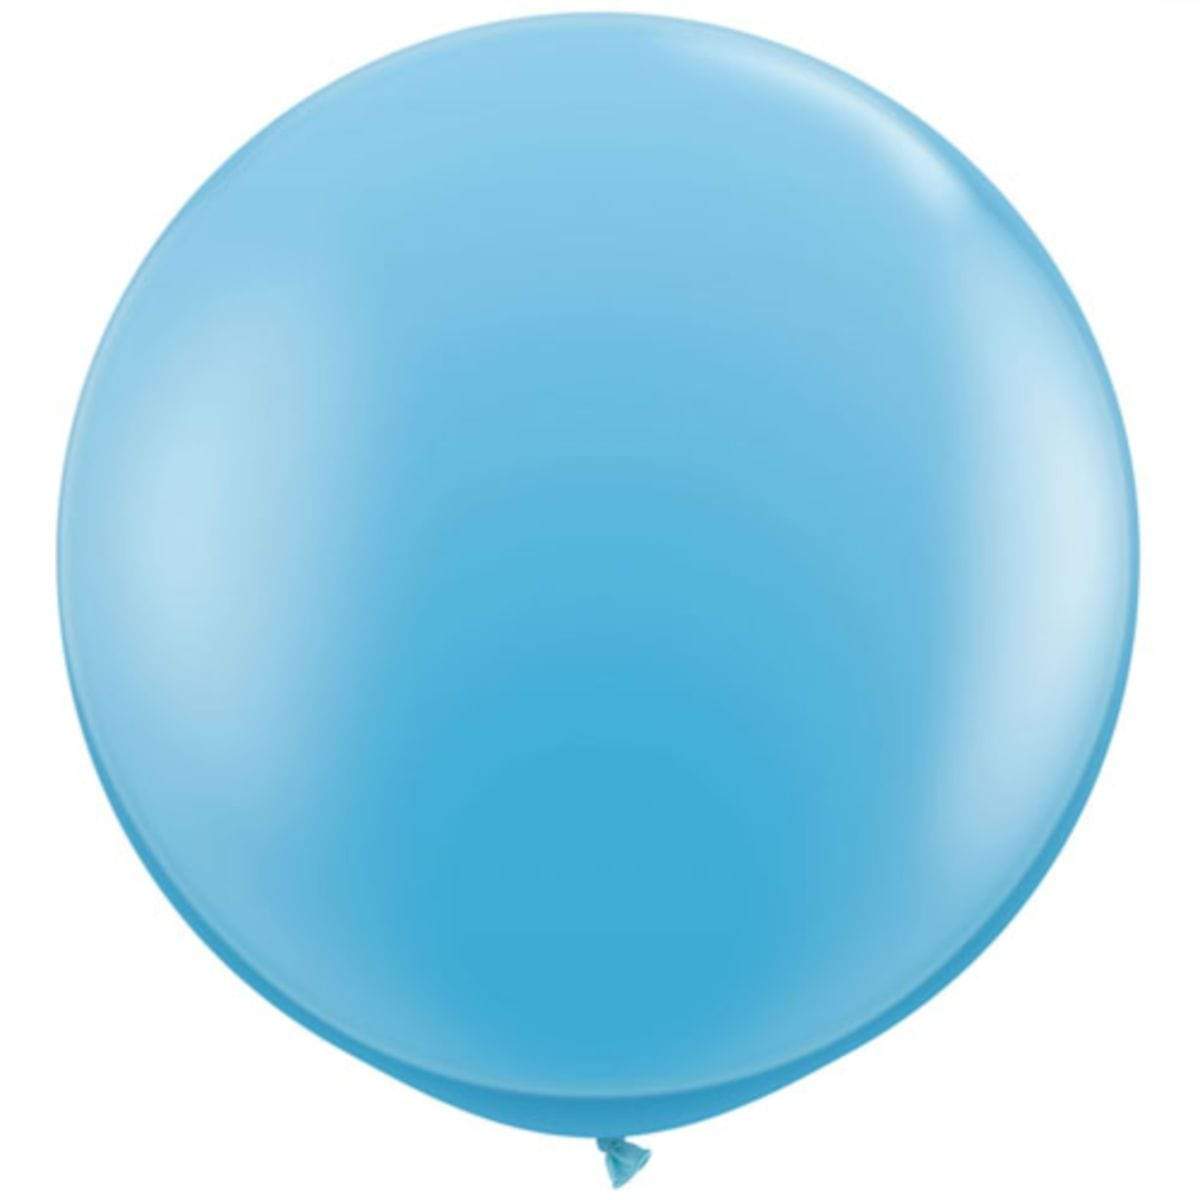 Blue Big Round Balloon | 3ft Jumbo Balloons | 36" Wedding Balloons Qualatex